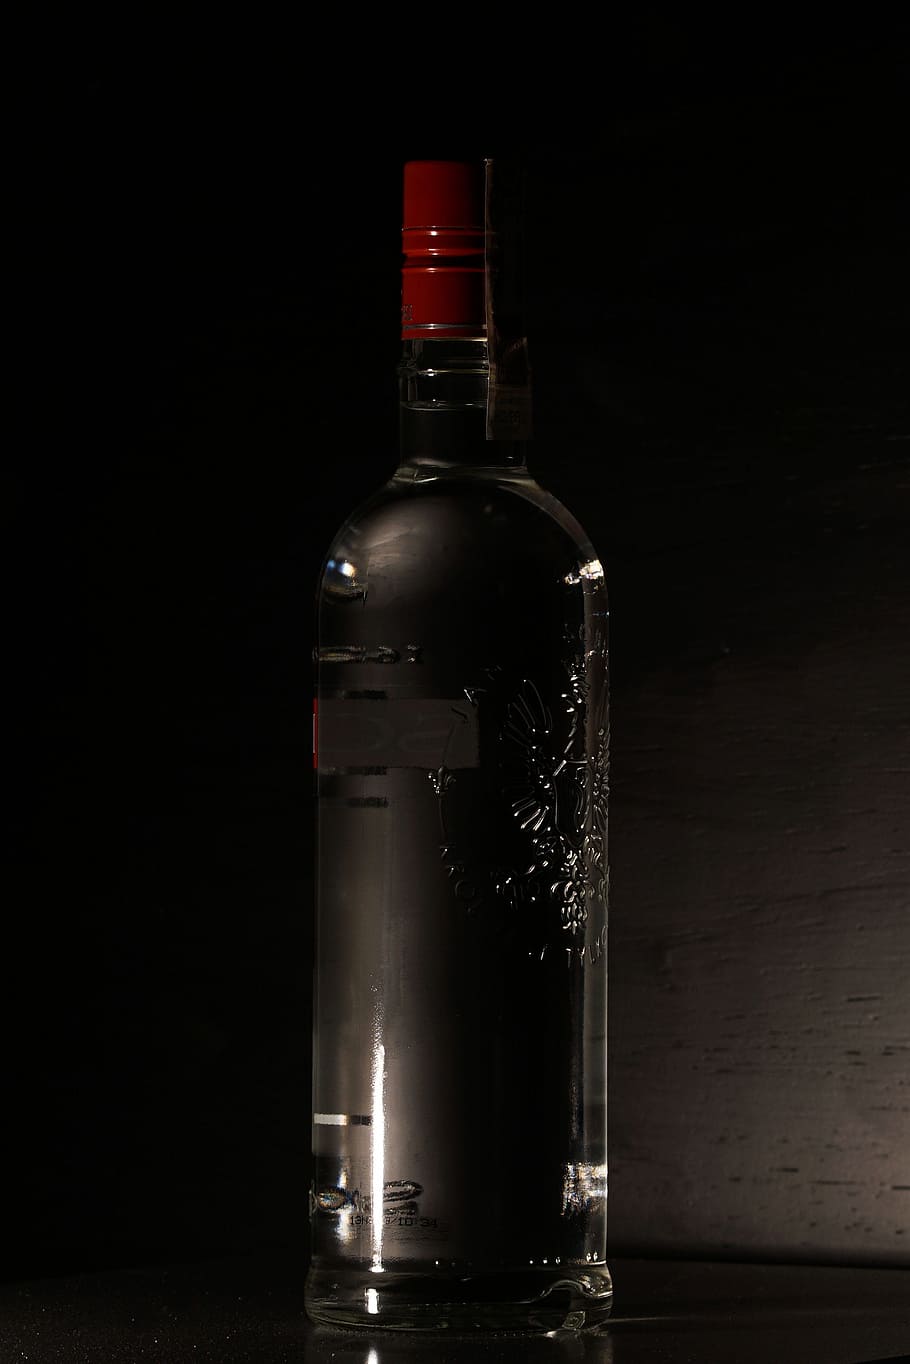 A bottle of belvedere vodka on a black background photo – Free Somewhere  Image on Unsplash